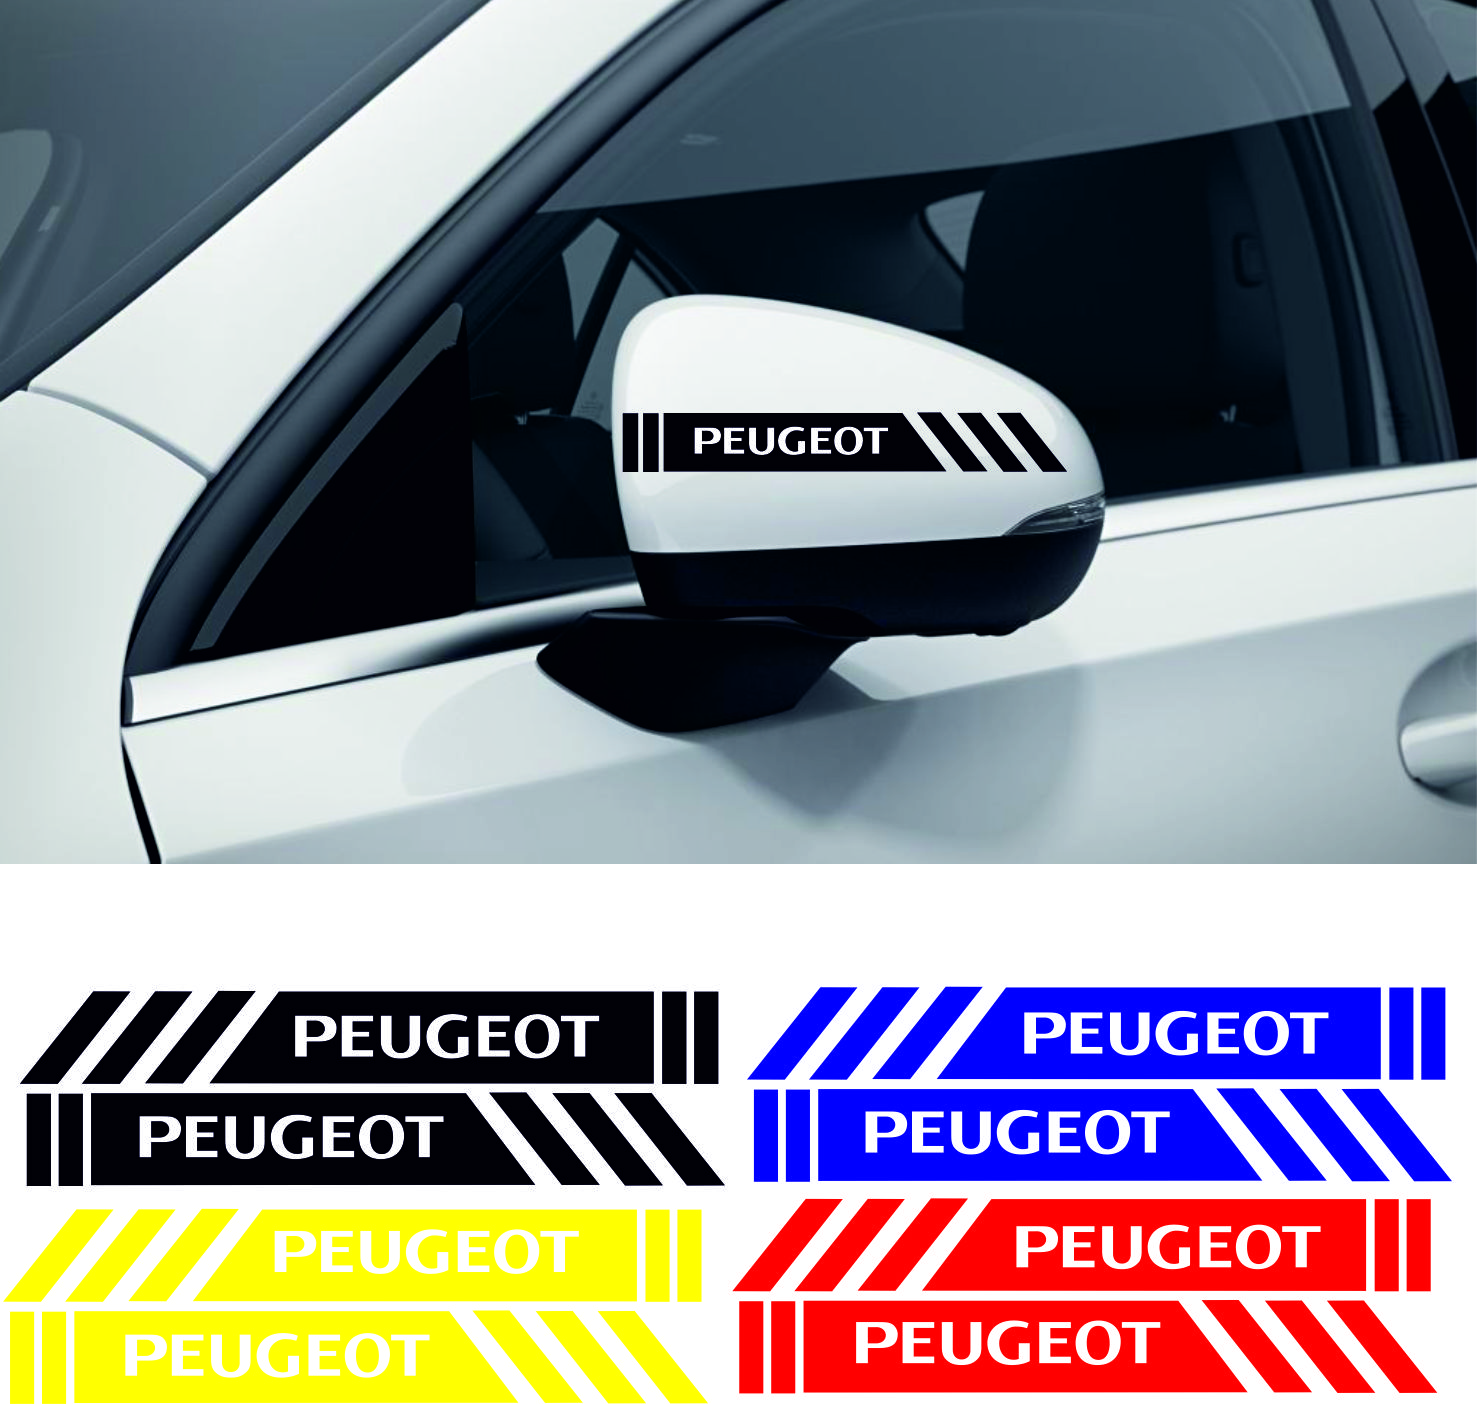 peugeot sticker 2 - Peugeot yan ayna şerit sticker